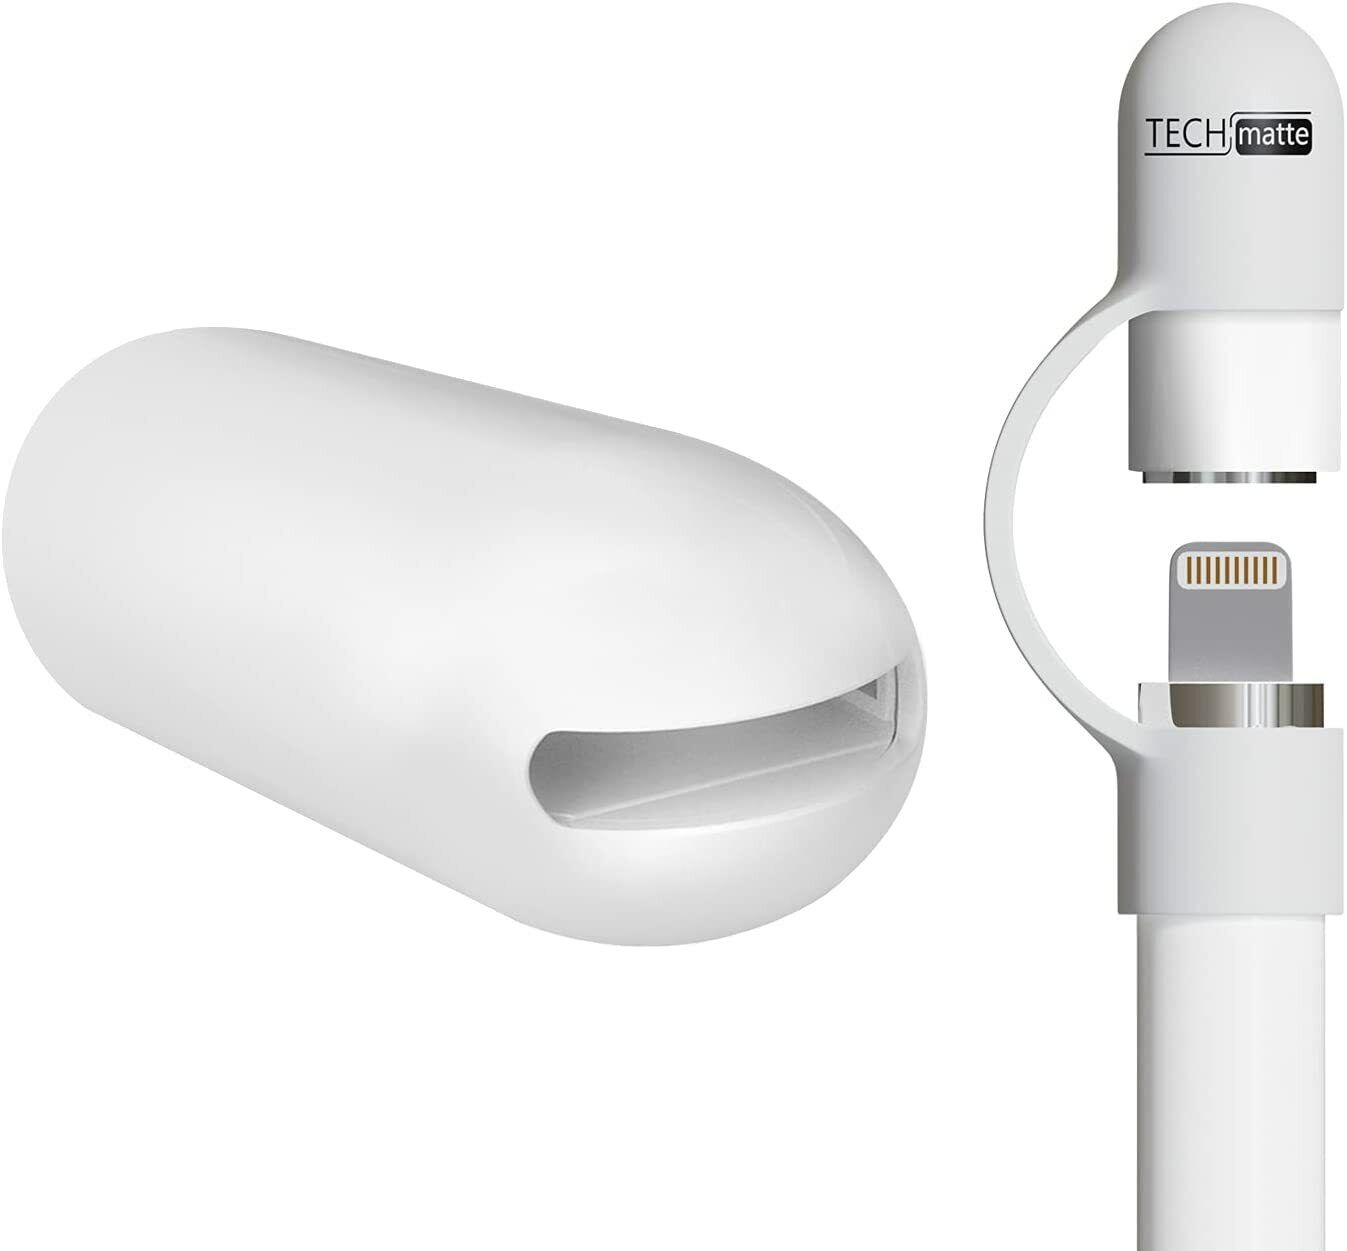 TechMatte 2-in-1 Cap Charging Adapter Compatible with Apple Pencil (1st Gen)